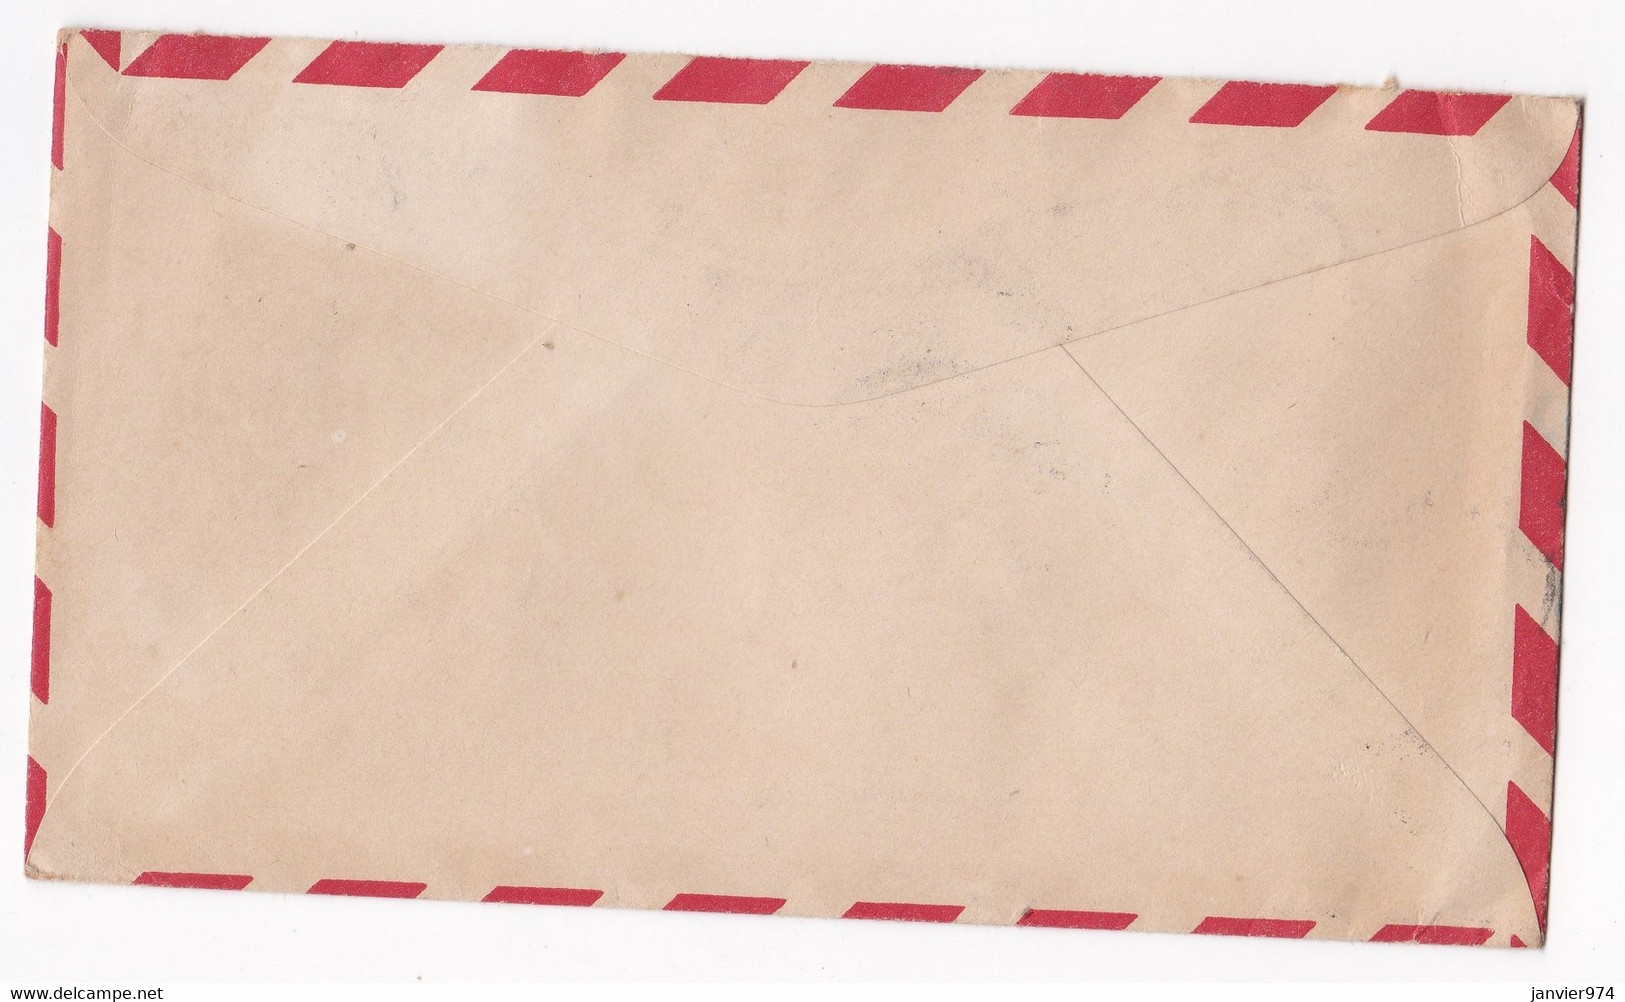 Lettre 1956 Egypte Pour Mérignac Gironde, 8 Timbres - Storia Postale